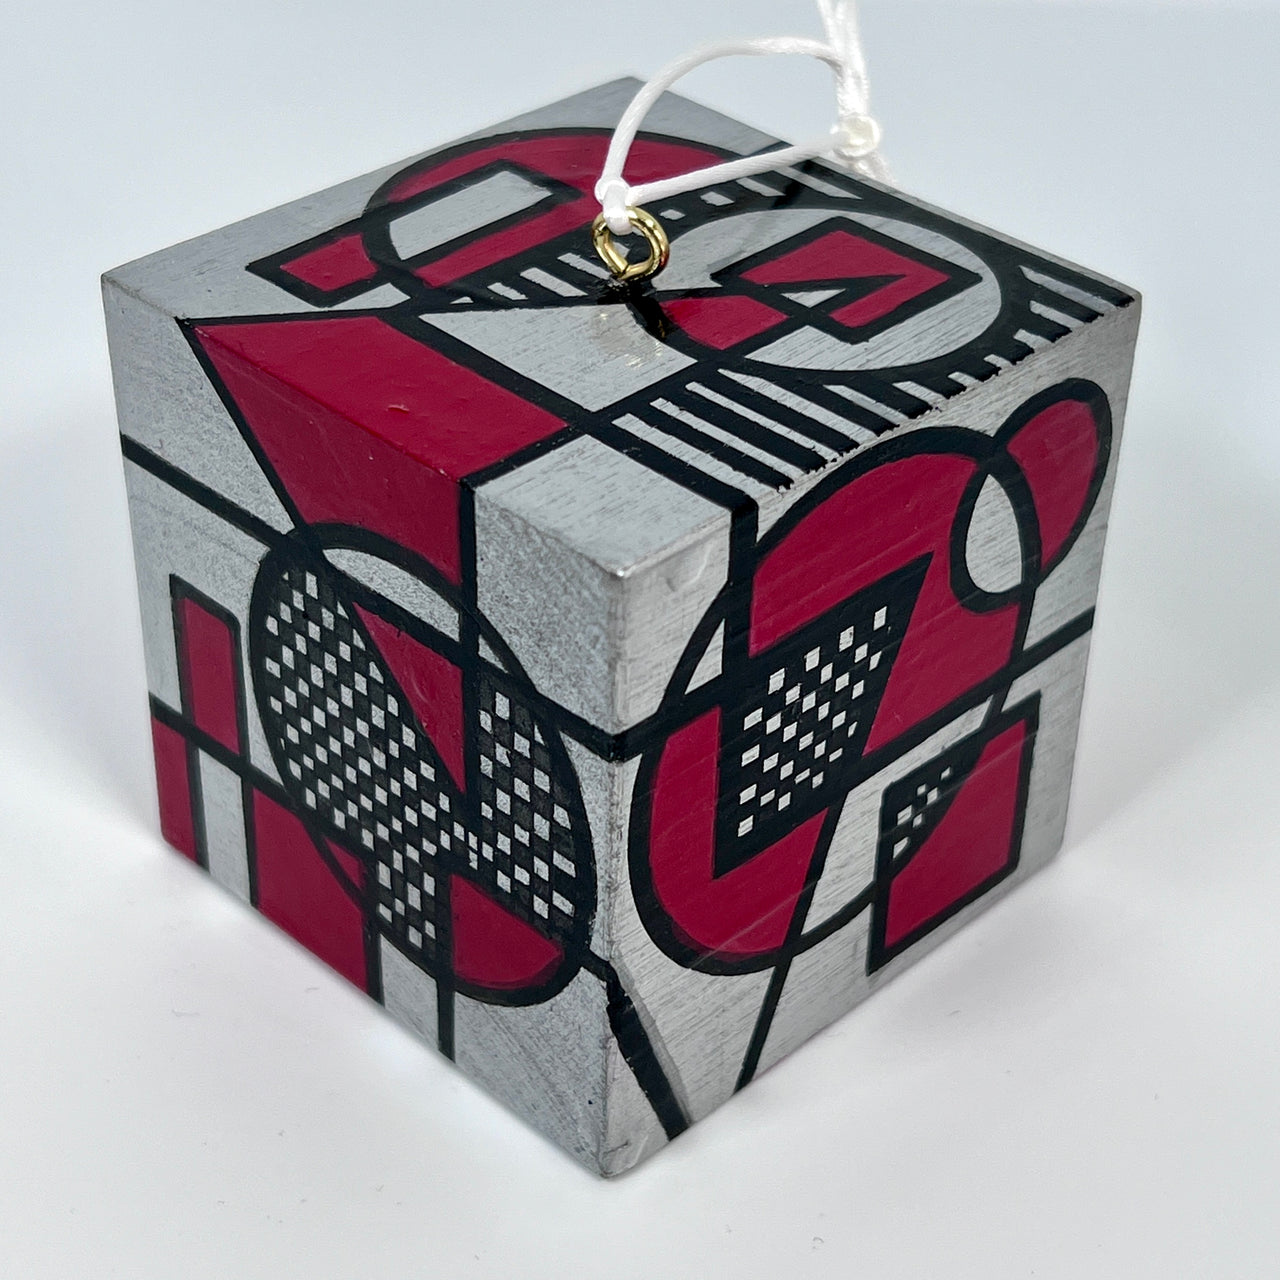 #4 - 3D Cube Art - 2.25" cube